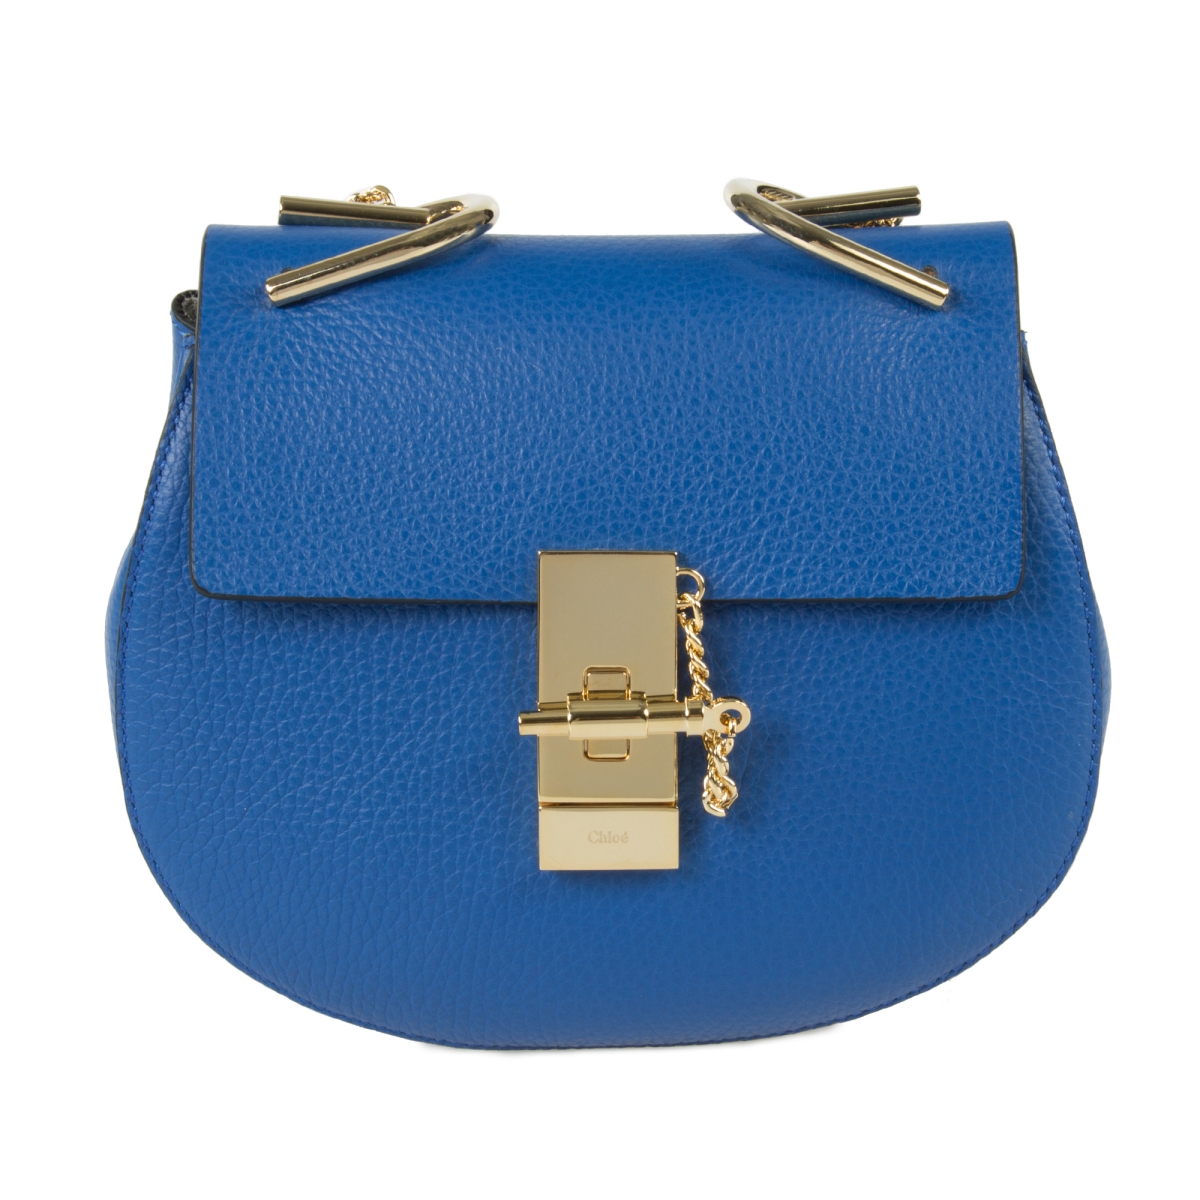 Chl-hbag-drw-blu-s Small Drew Bag, Blue With Gold Hardware